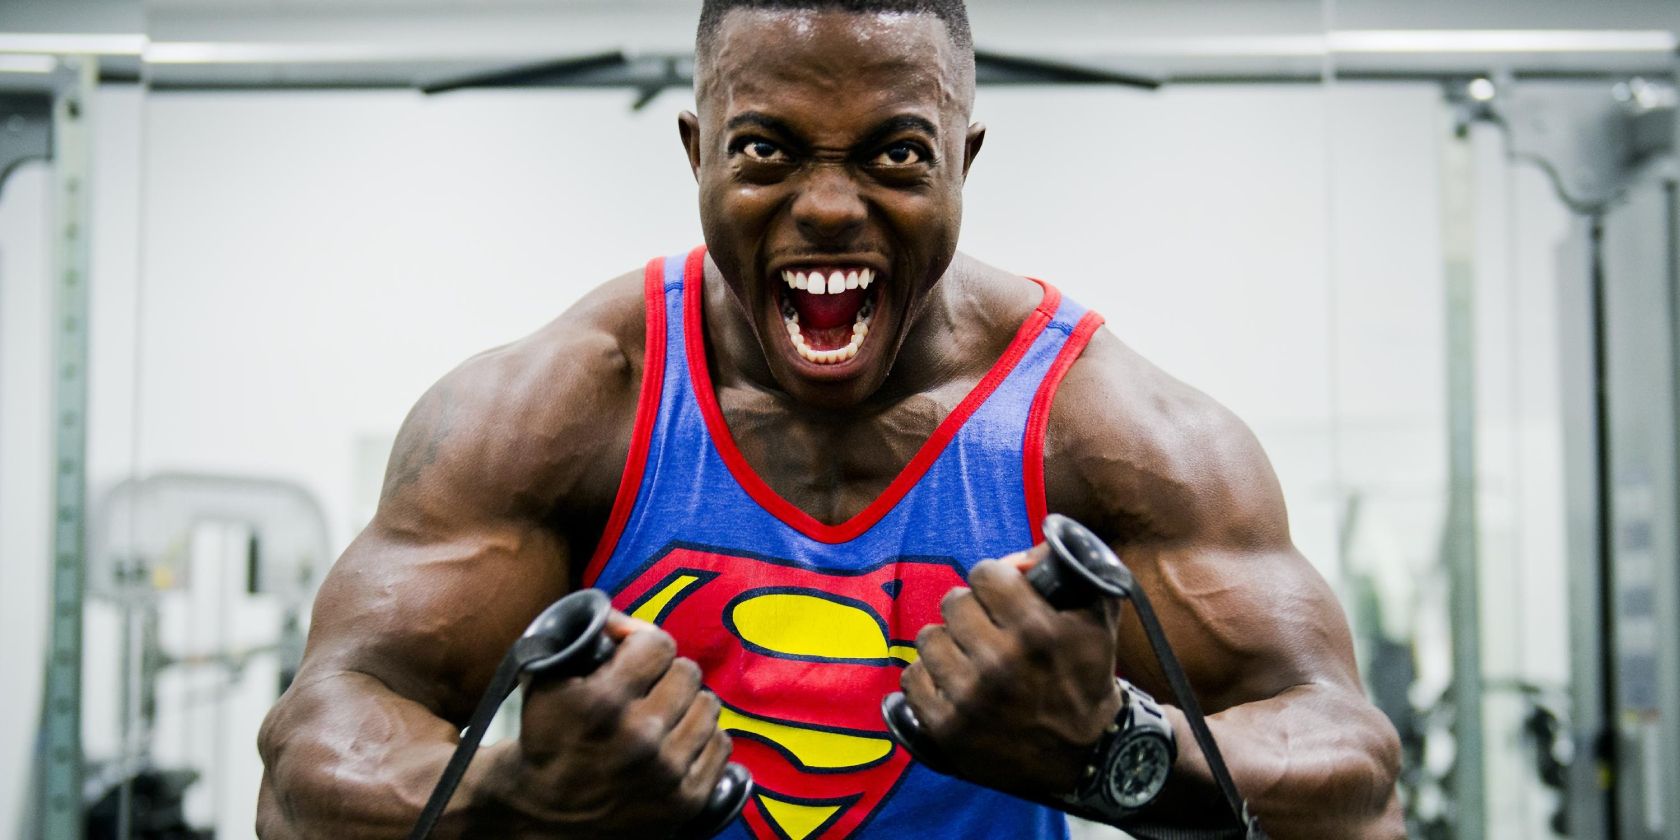 Man lifting weights in a superman shirt